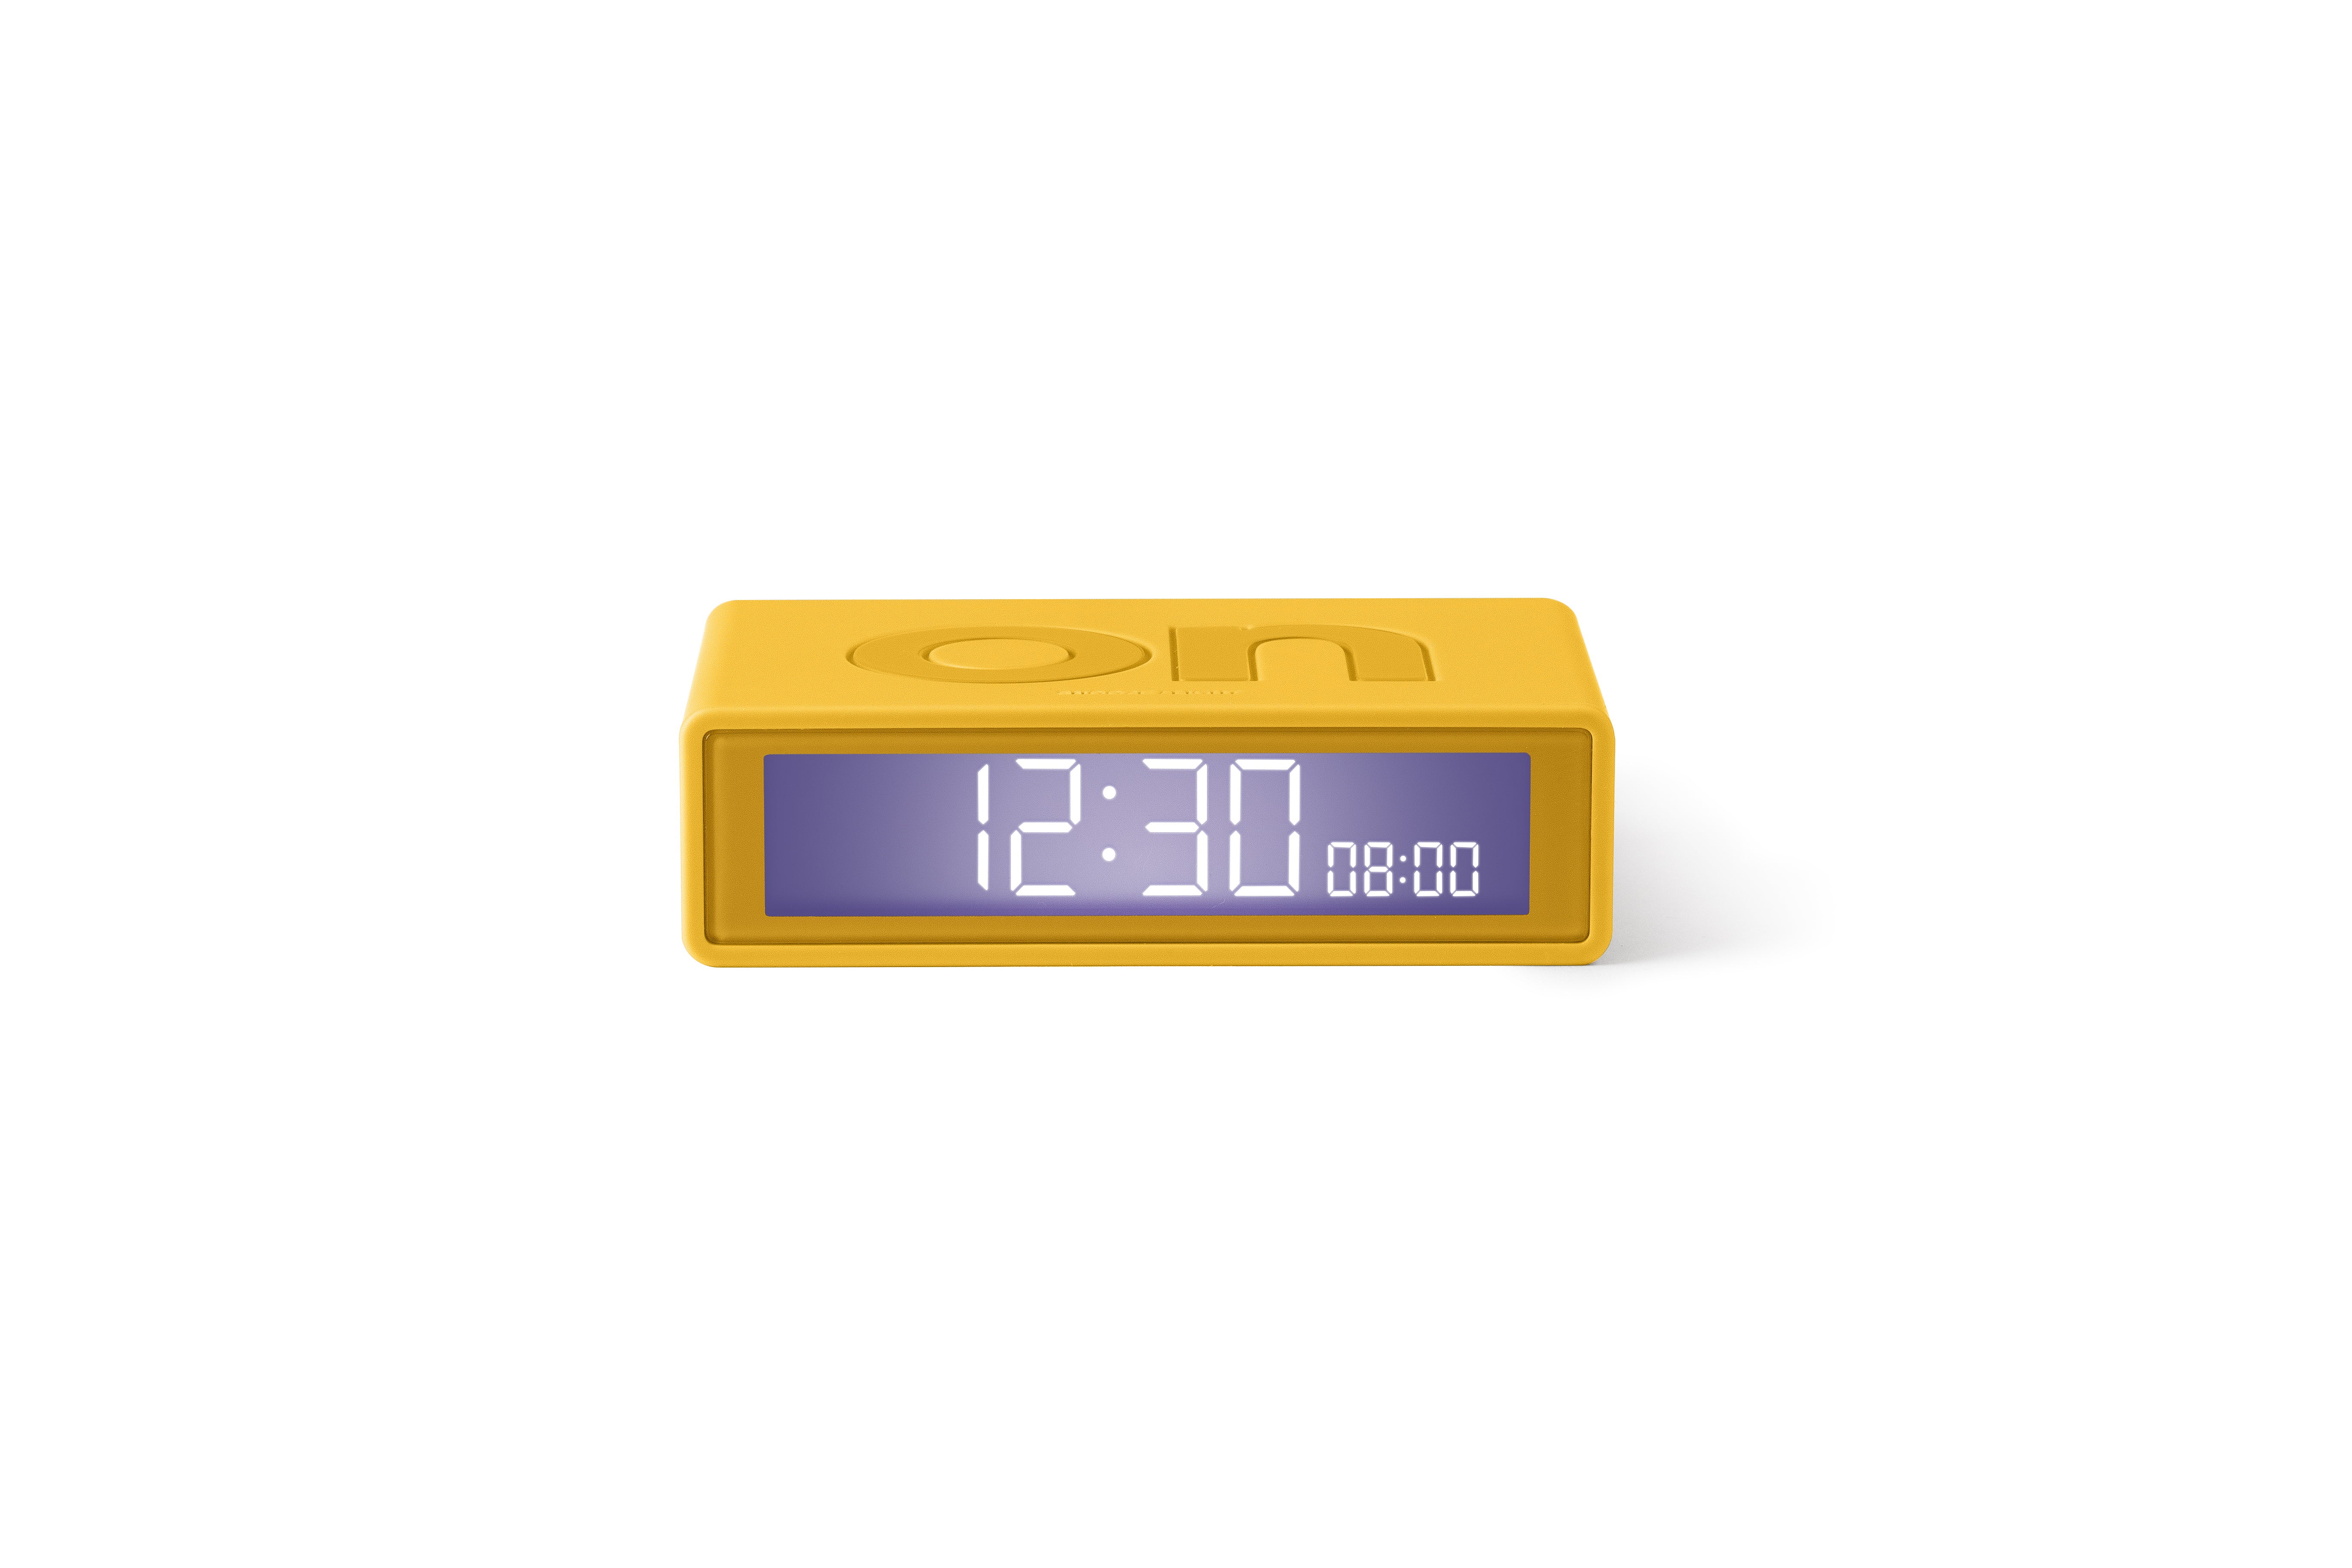 Lexon Flip+ Travel Clock Small